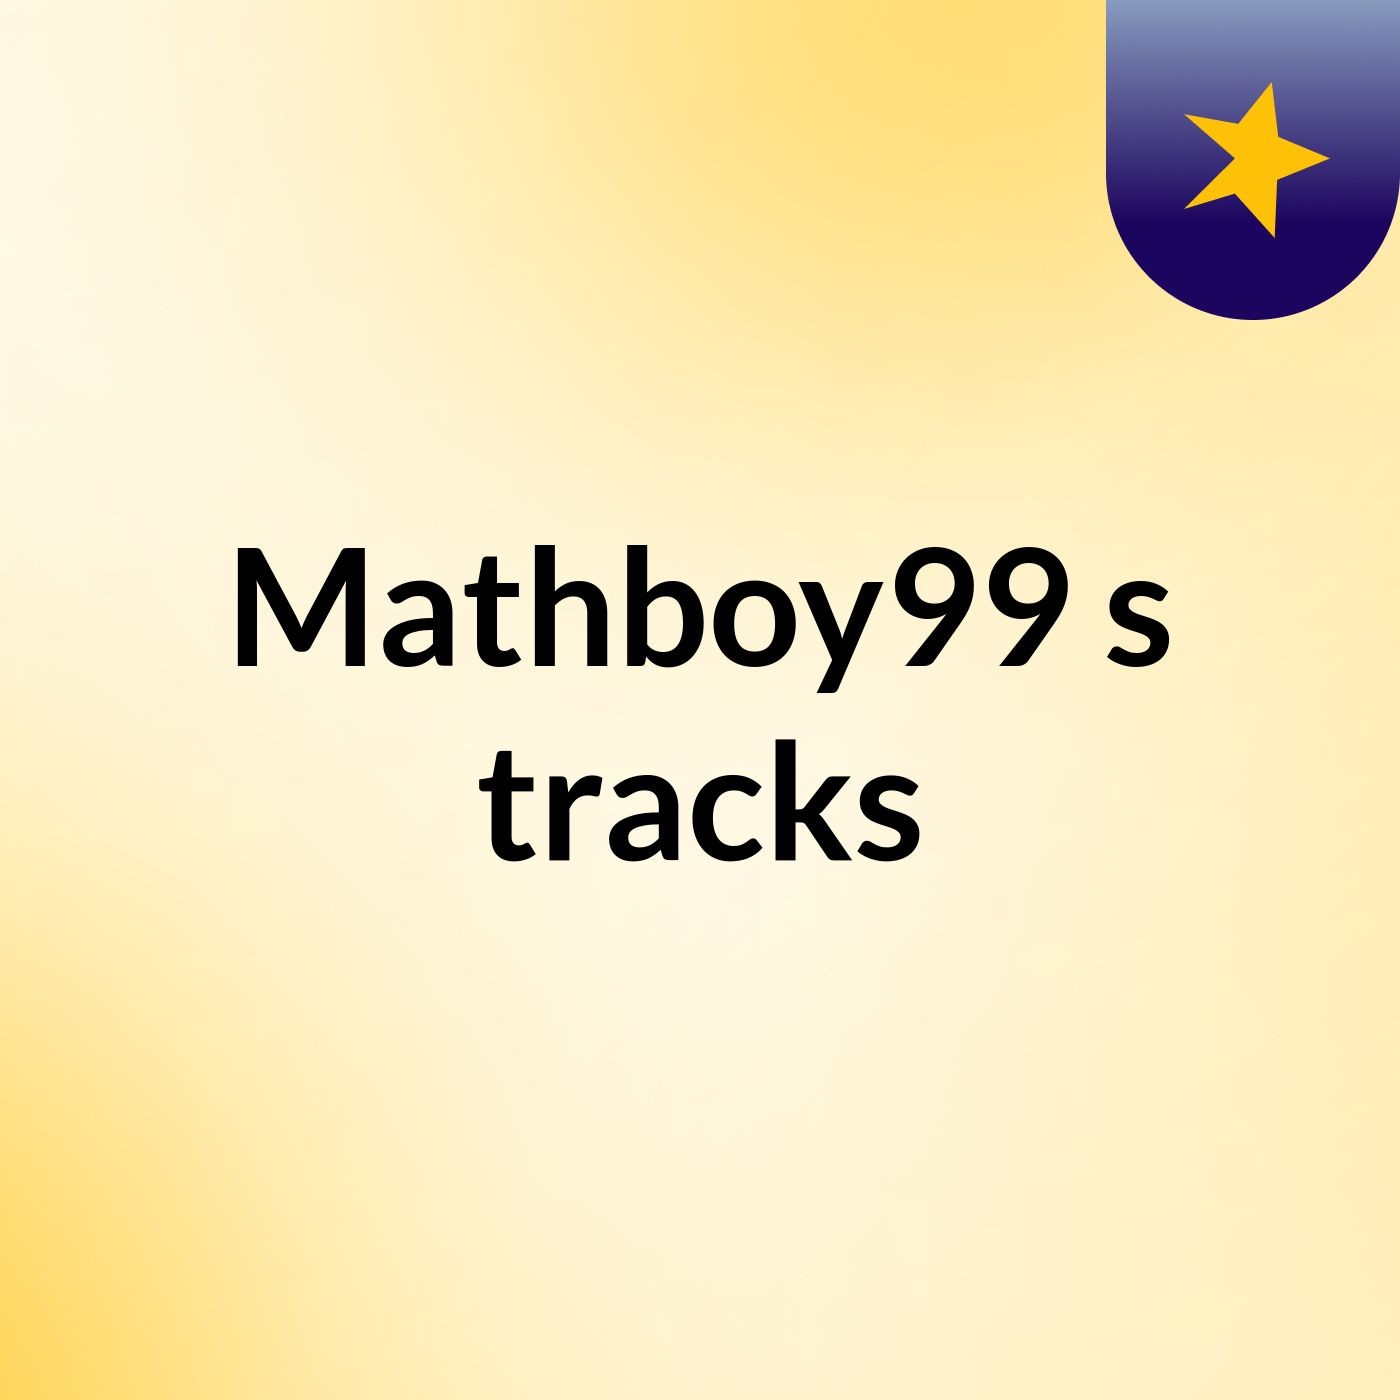 Mathboy99's tracks